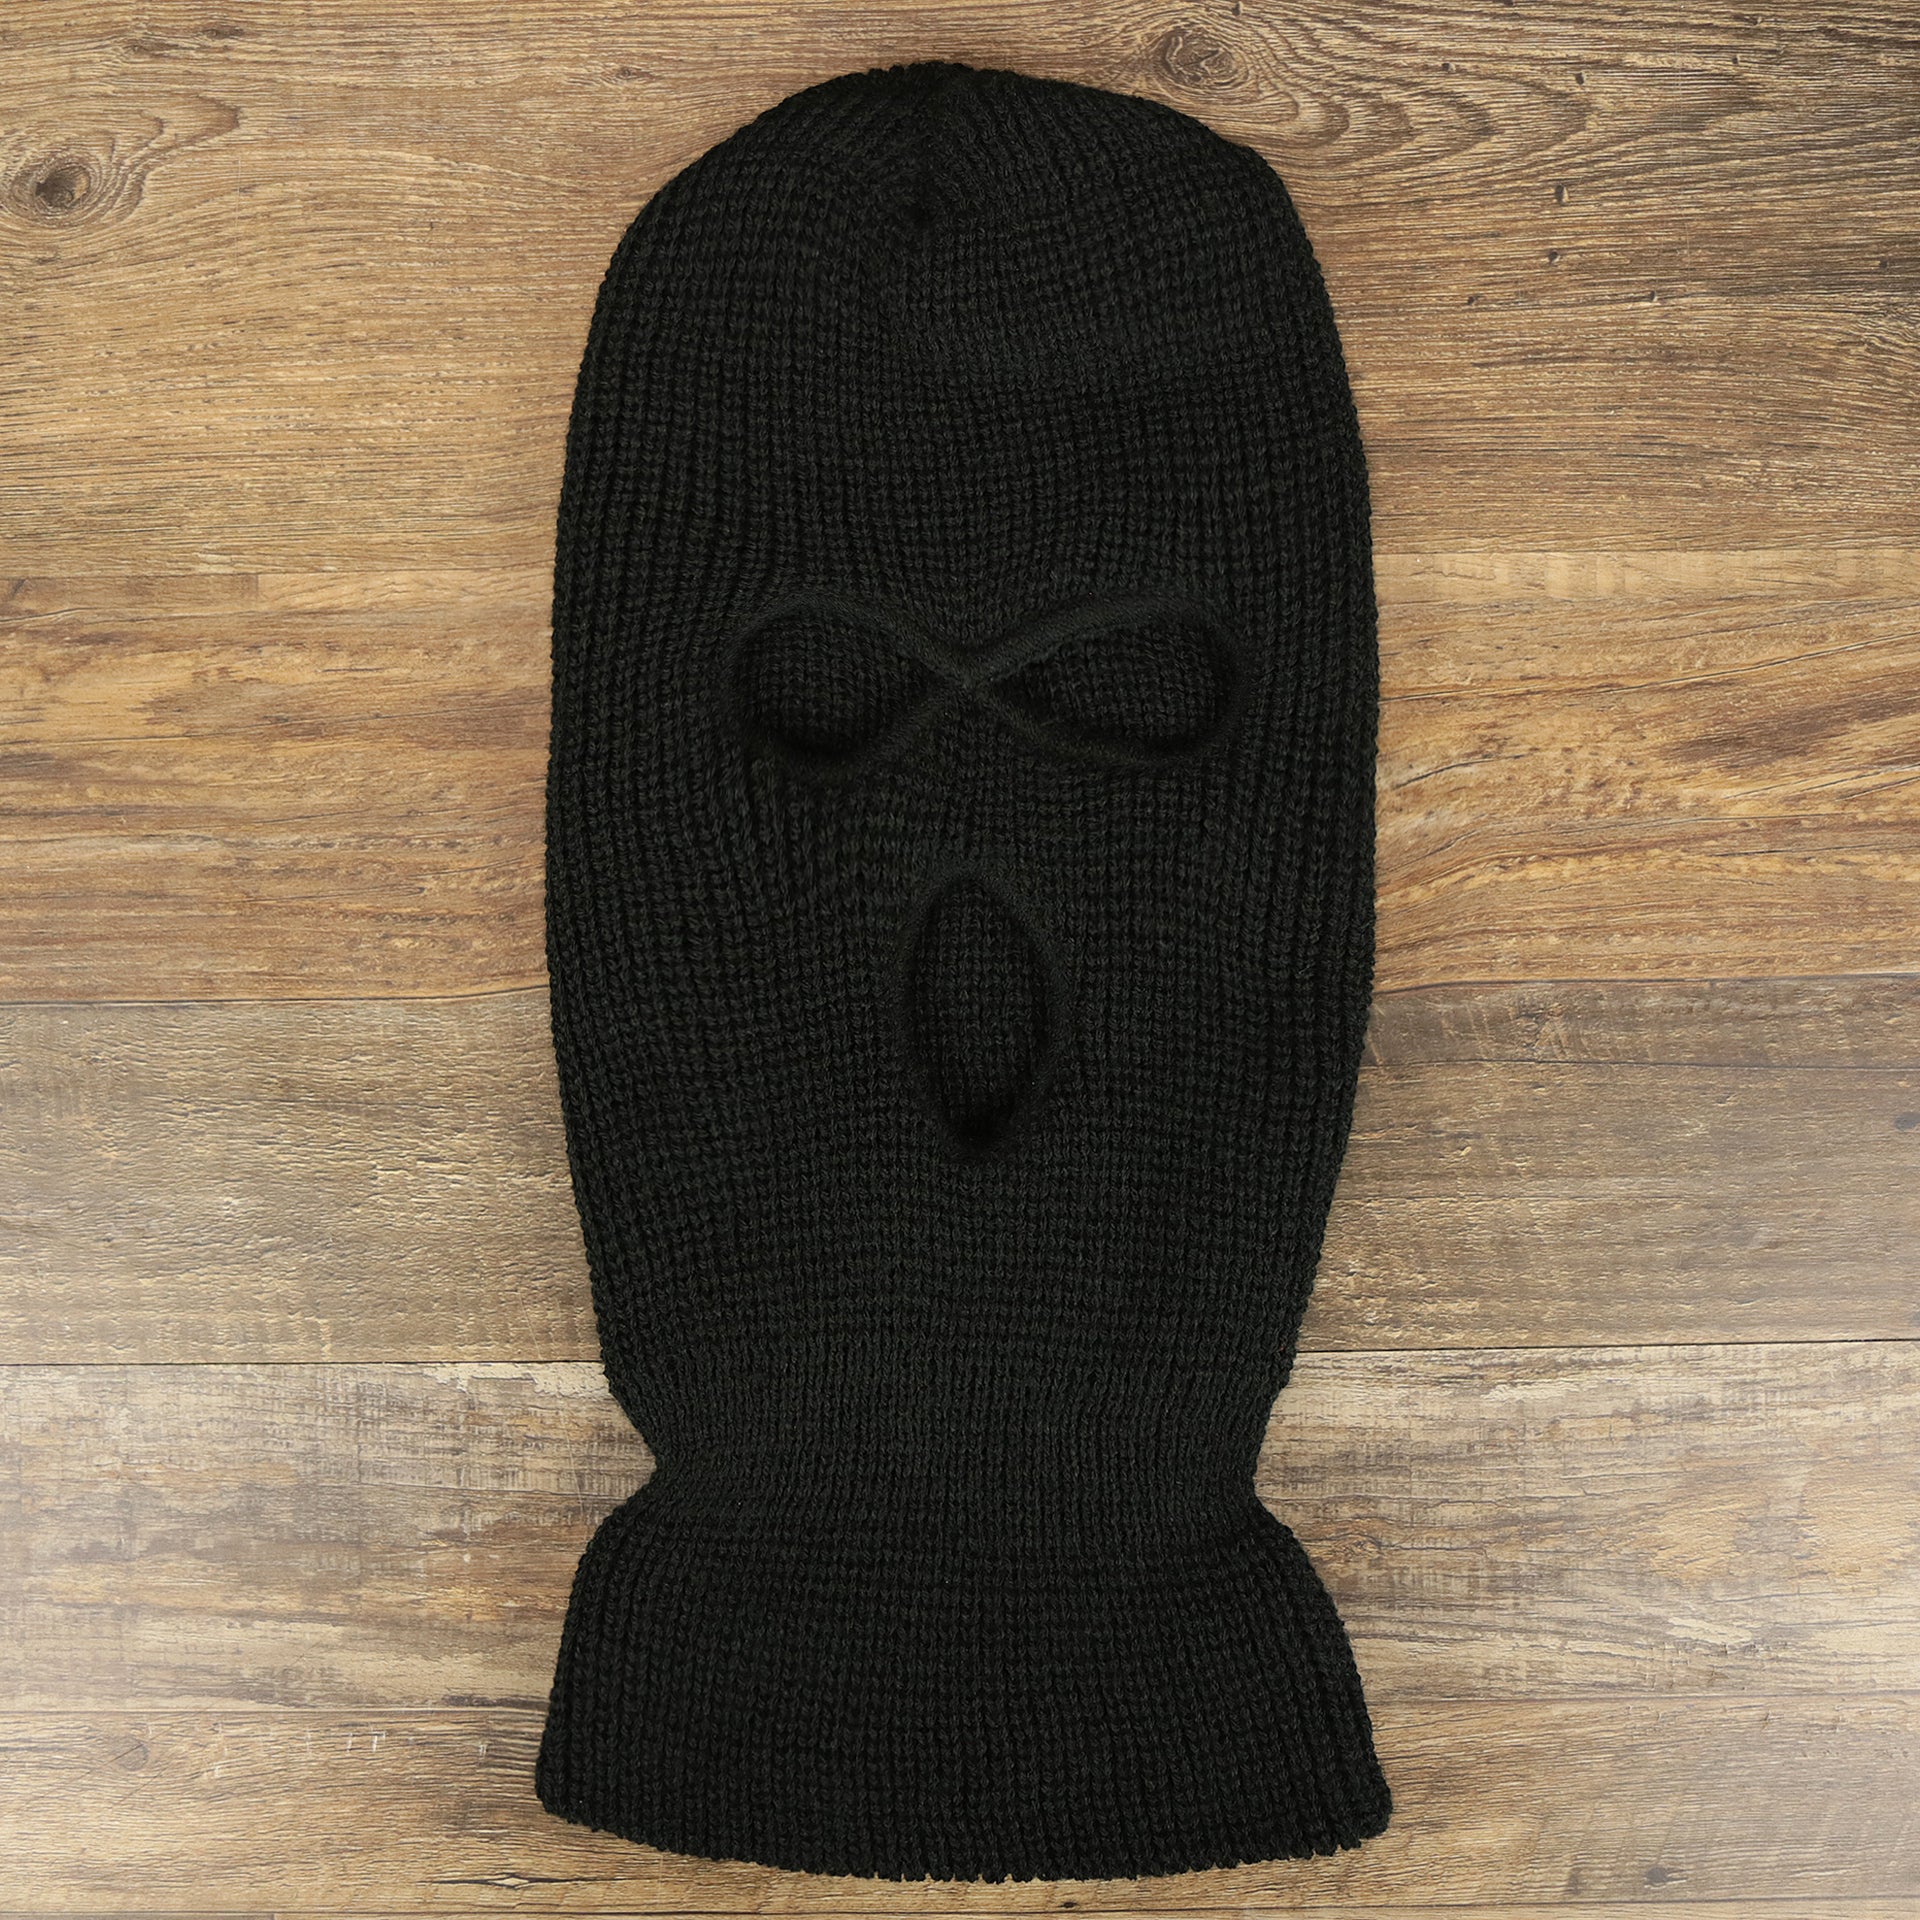 The Black Snug Fit Three Hole Balaclava | Black Knit Ski Mask on the ground